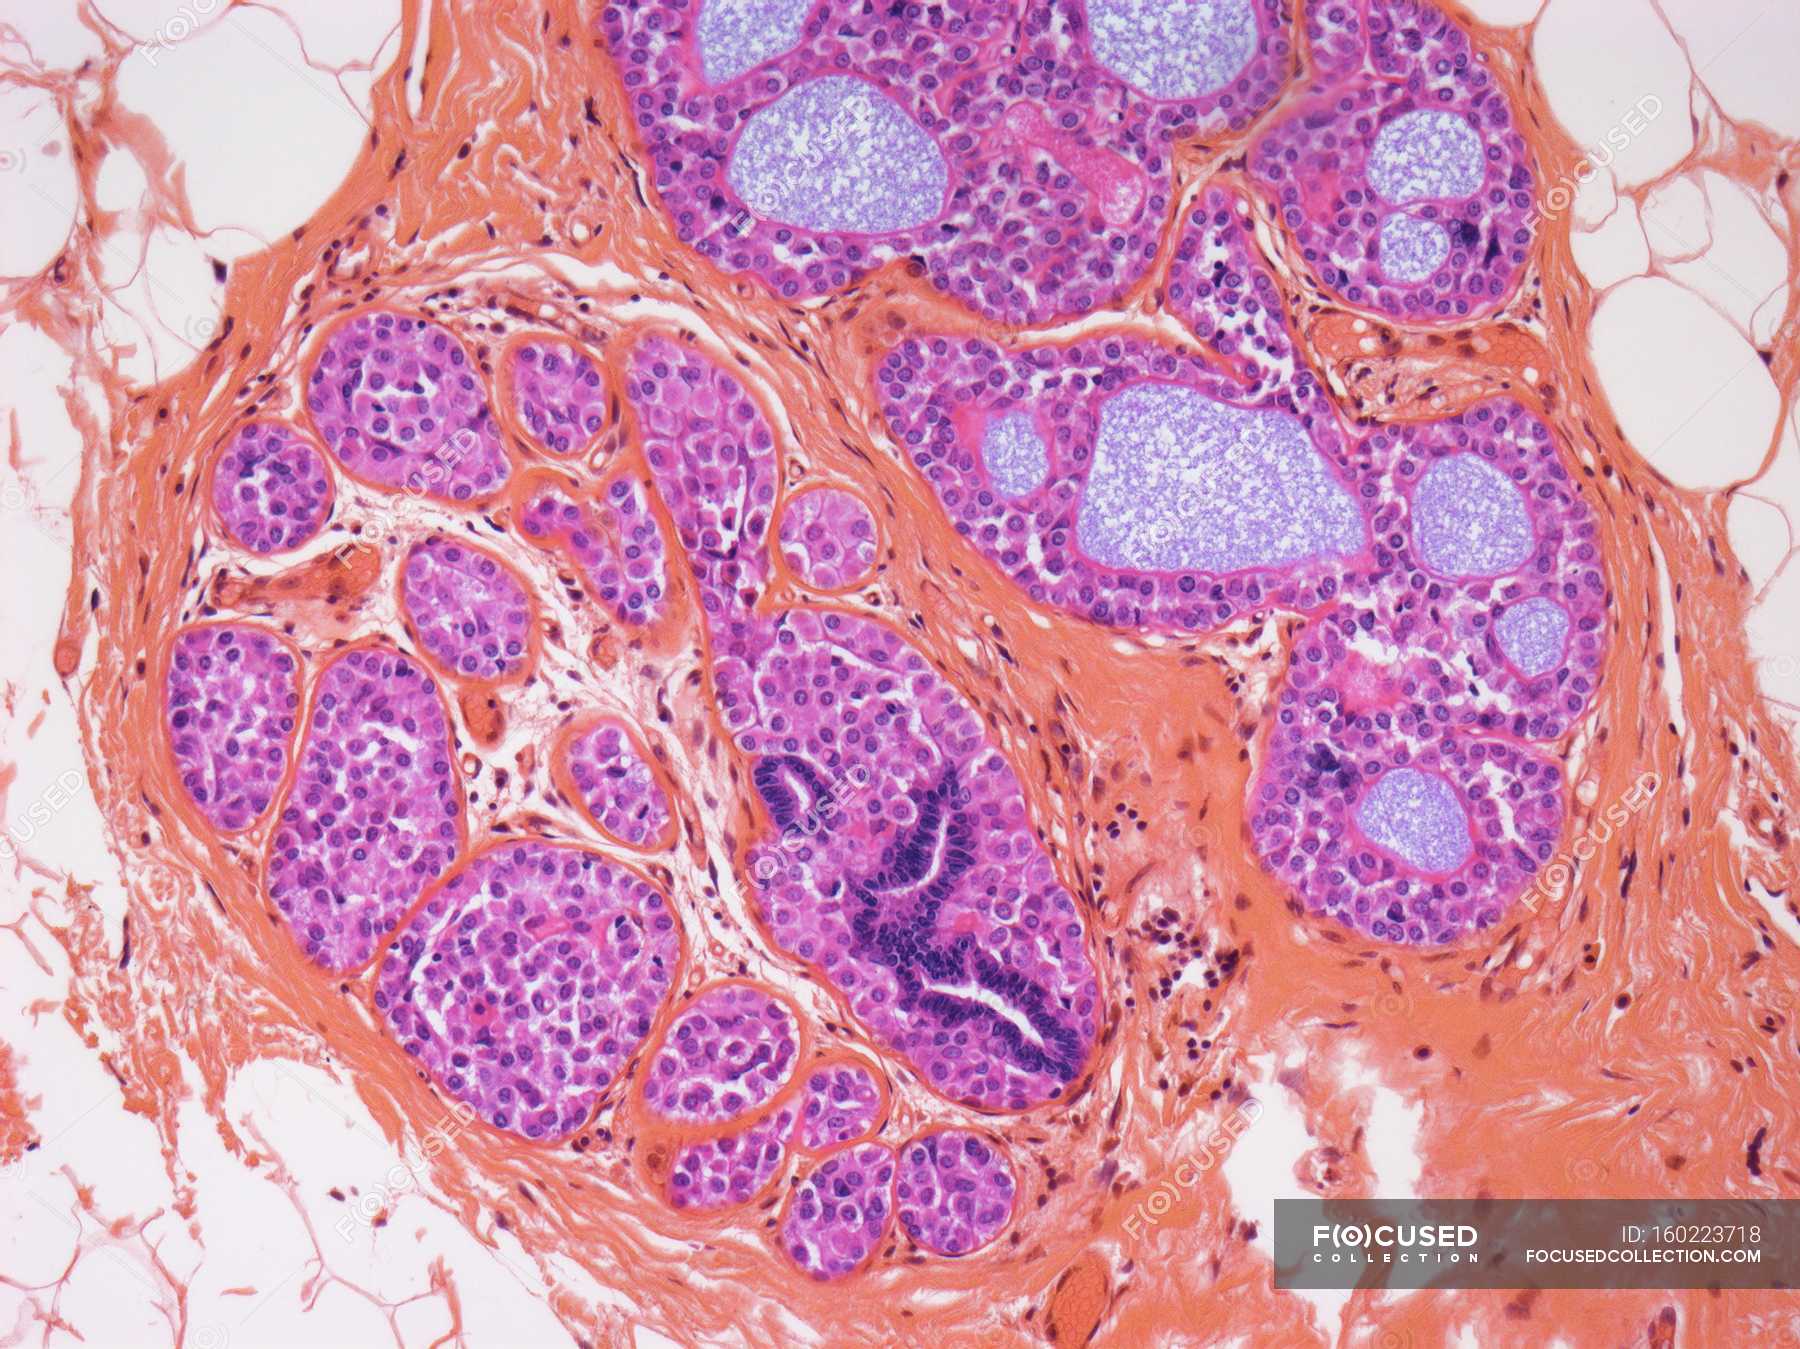 Breast with lobular carcinoma  lobular neoplasia, physiology